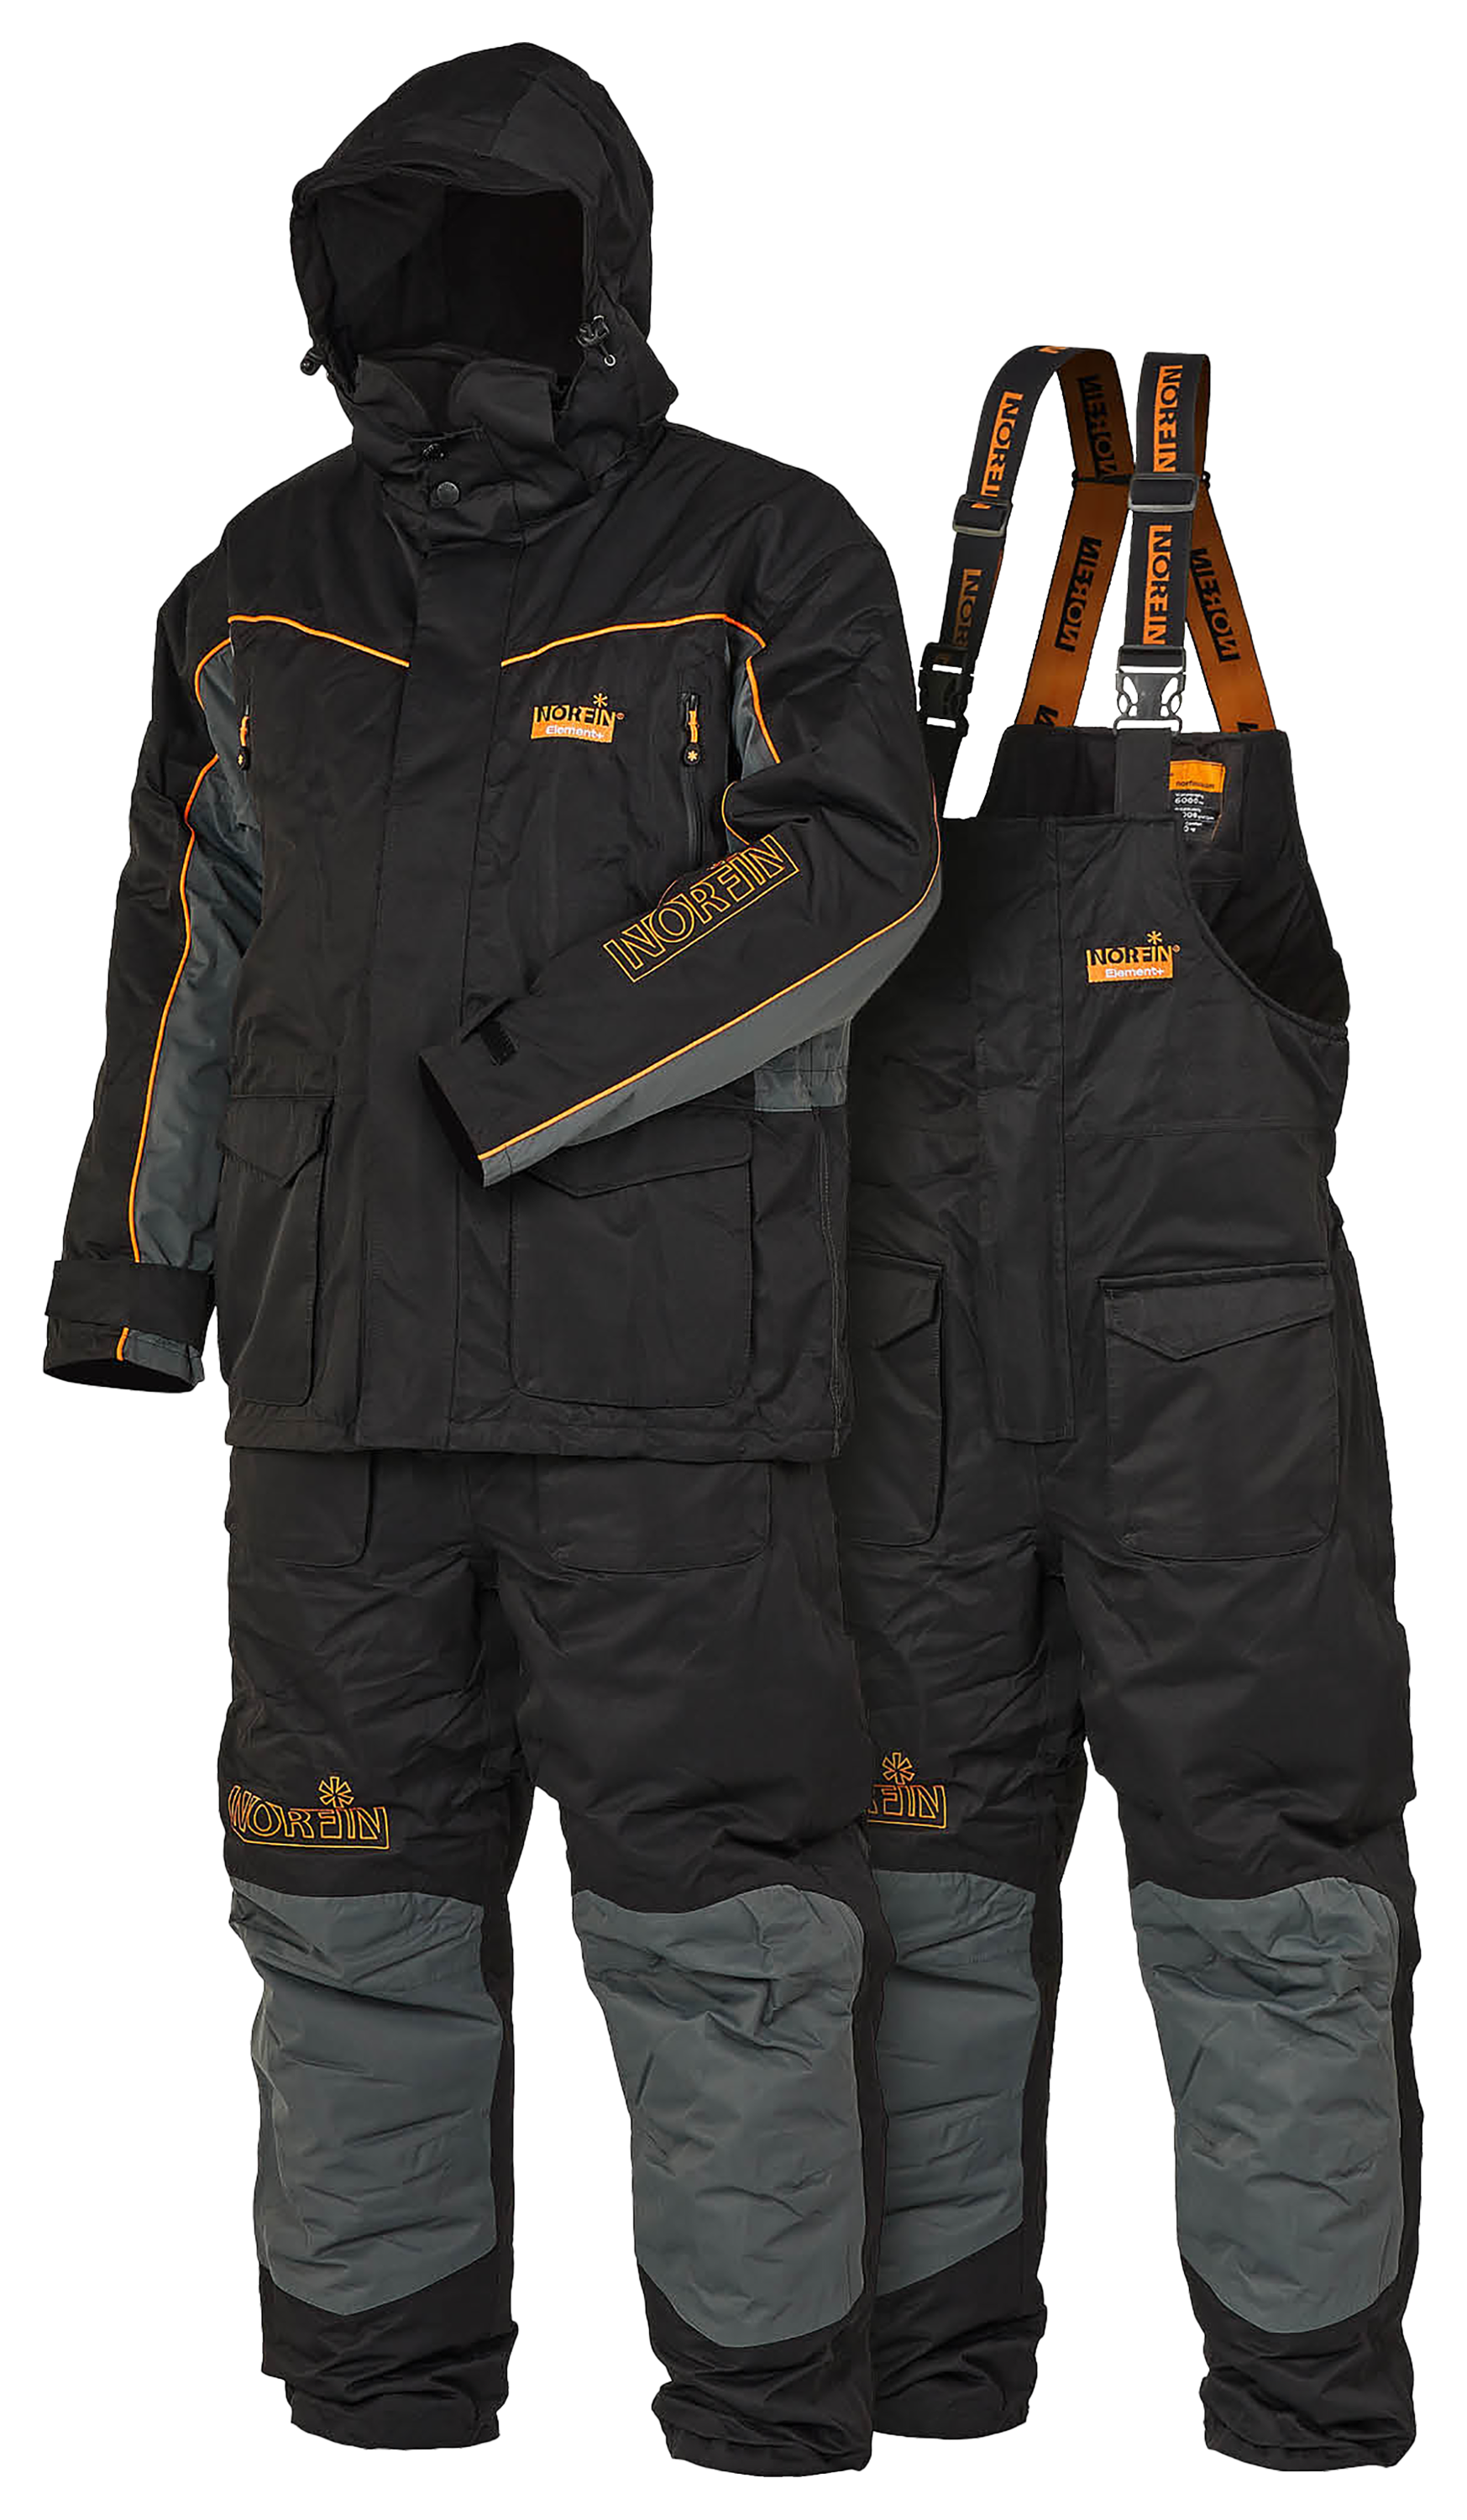 Winter Fishing Suit - Norfin ELEMENT + JUNIOR – Norfin Fishing Apparel